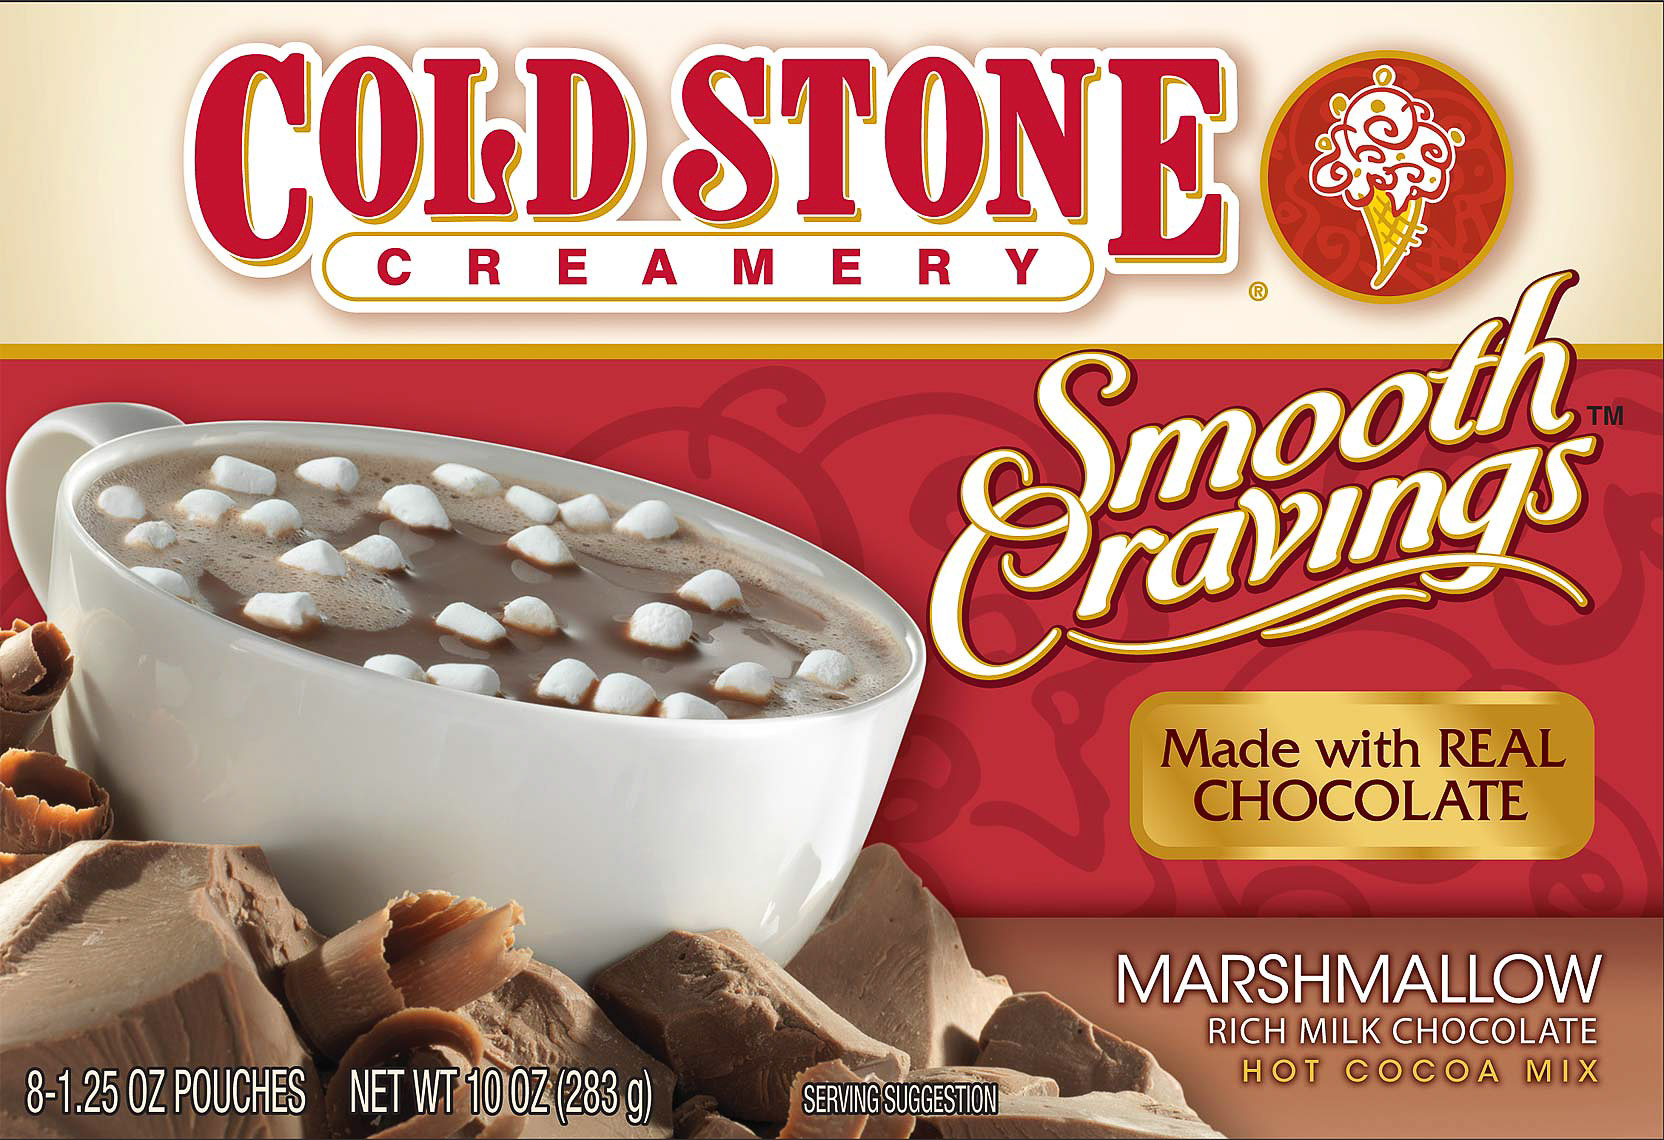 Client: Cold Stone Creamery